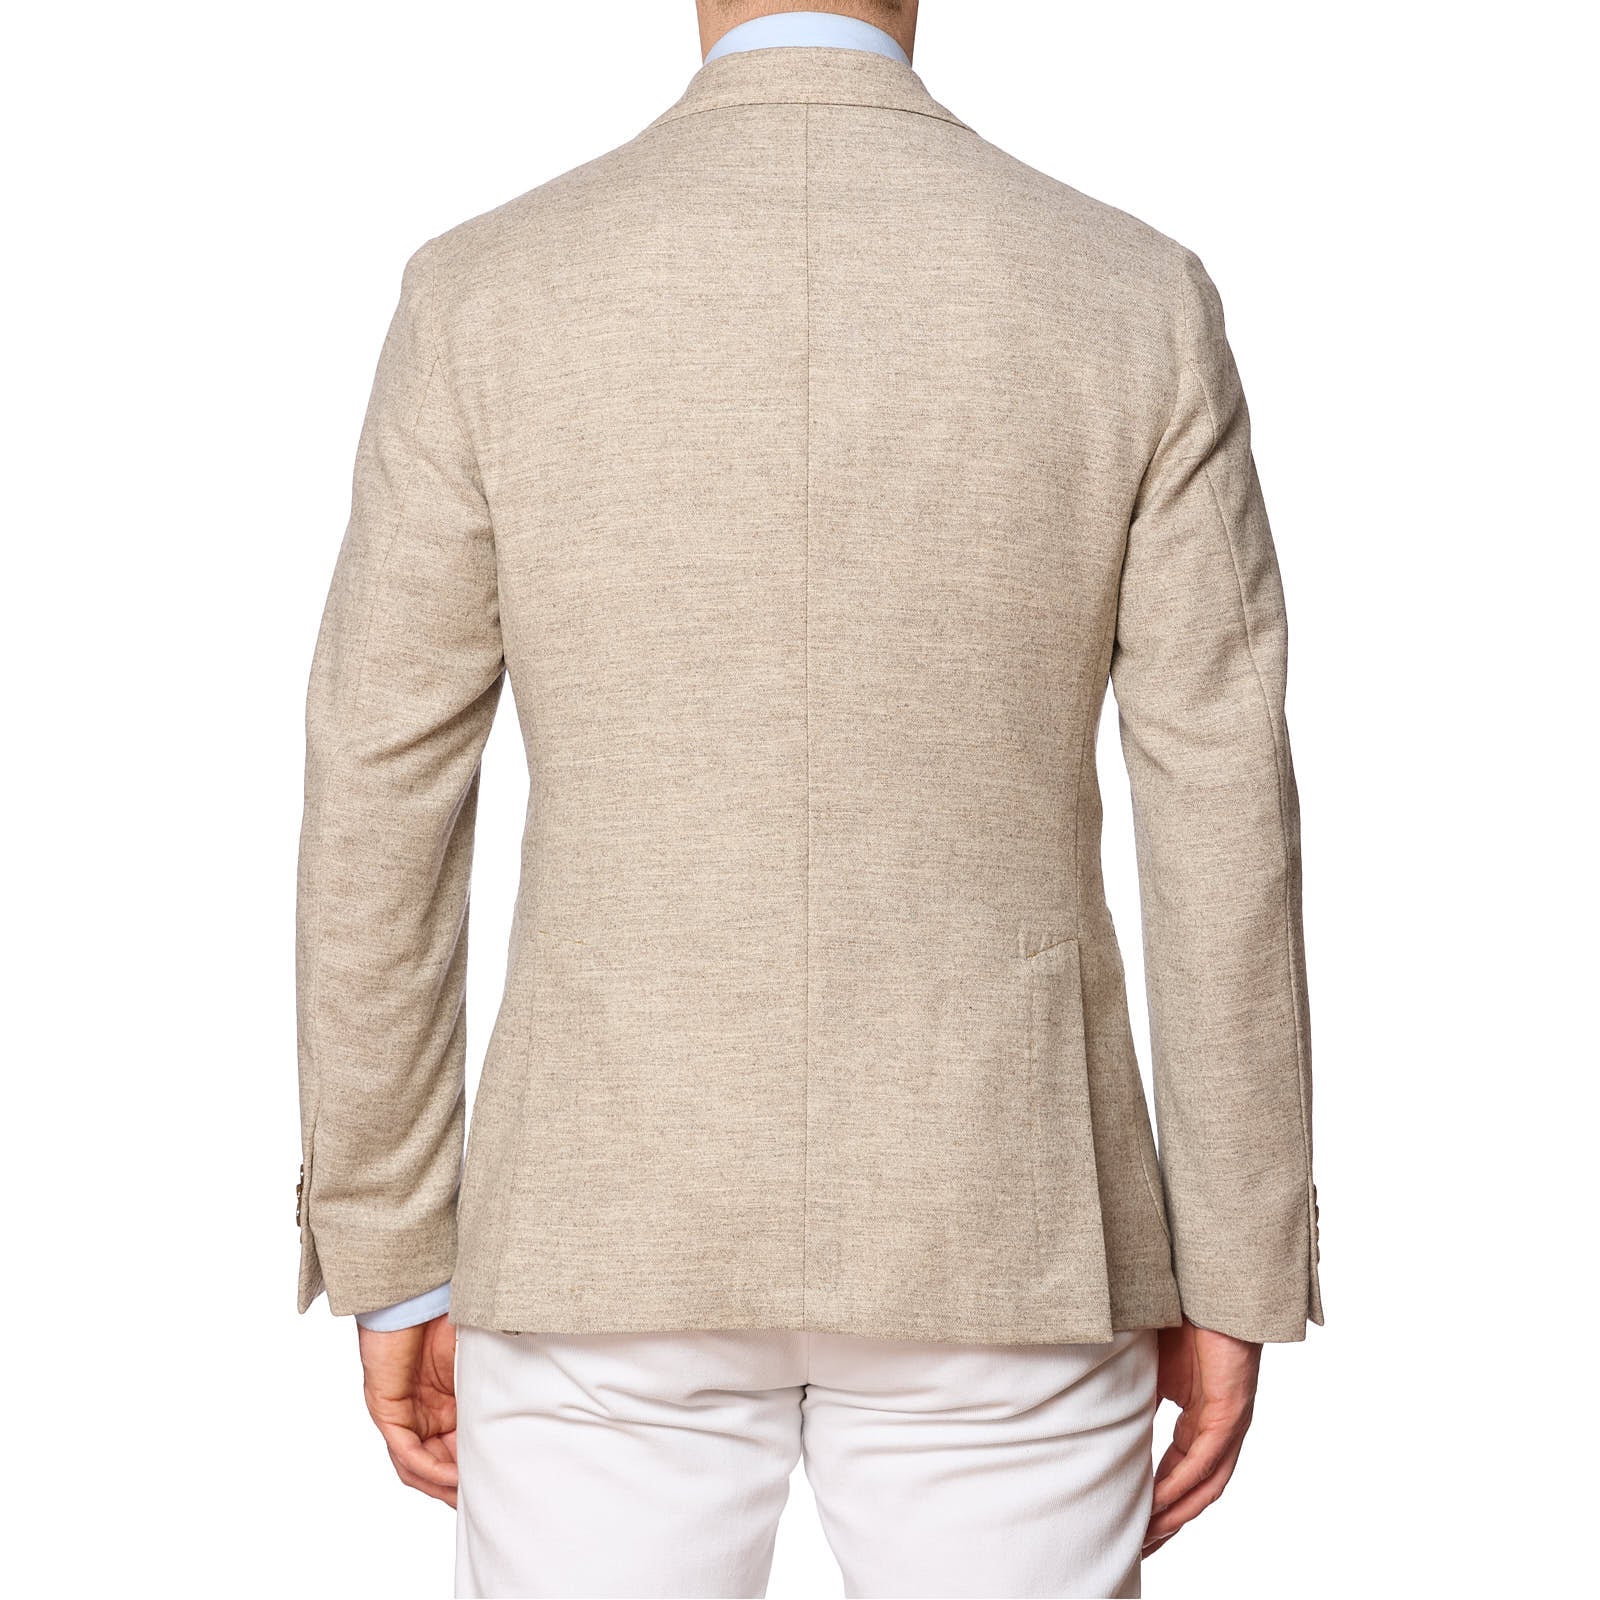 SARTORIA PARTENOPEA Beige Wool-Cashmere Unlined Jacket NEW  Current Model